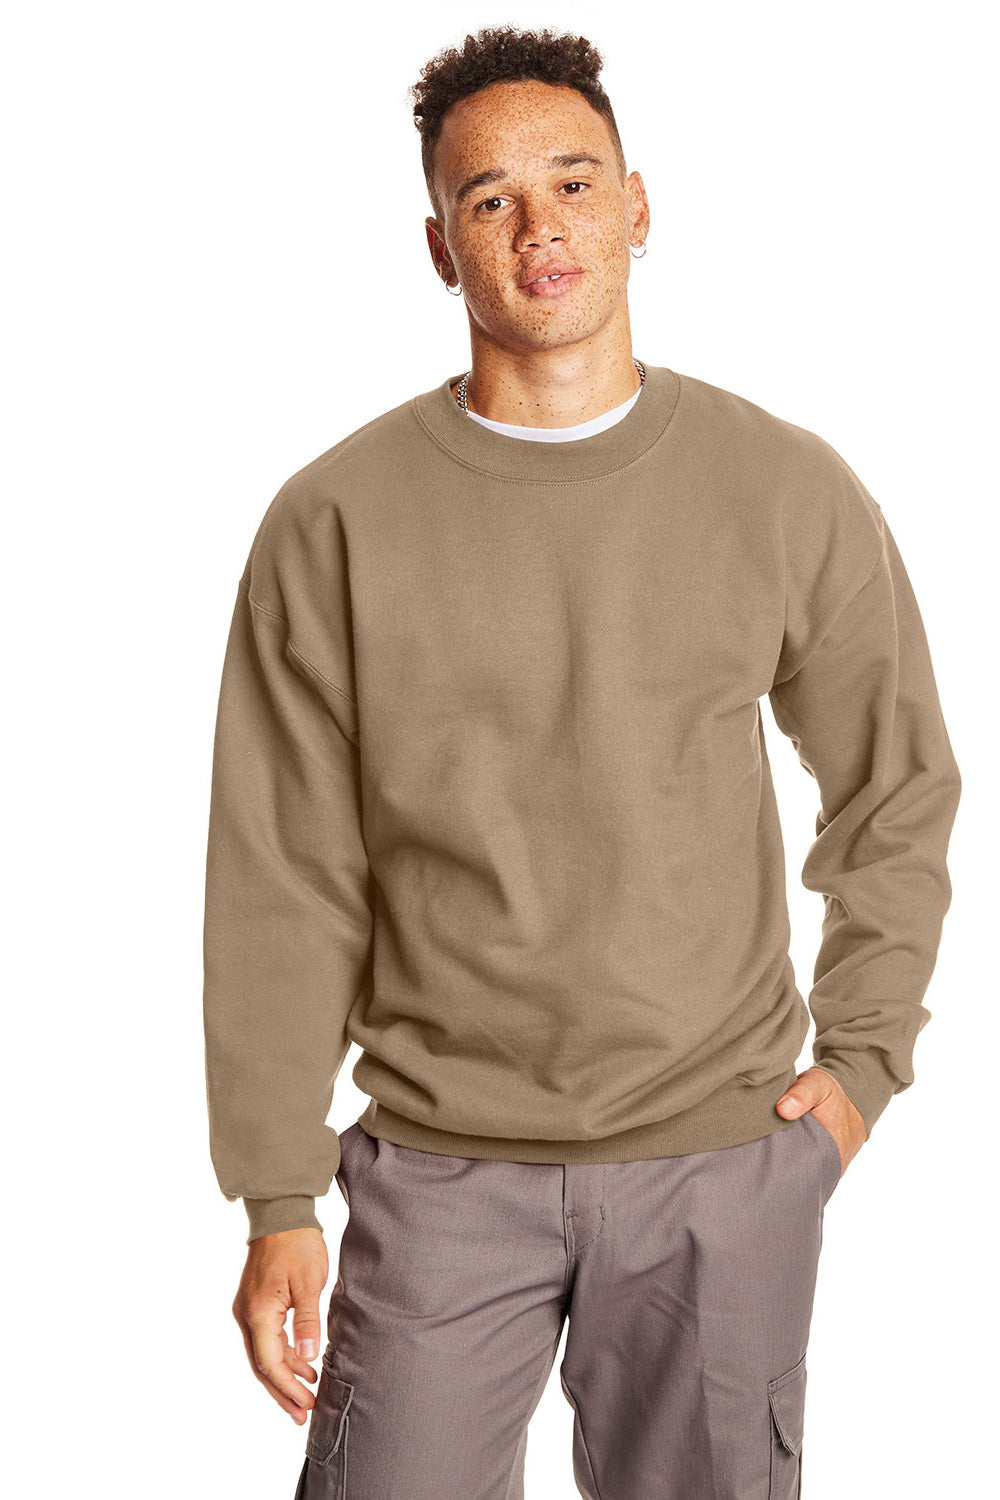 Hanes F260 Mens Ultimate Cotton PrintPro XP Crewneck Sweatshirt Pebble Front